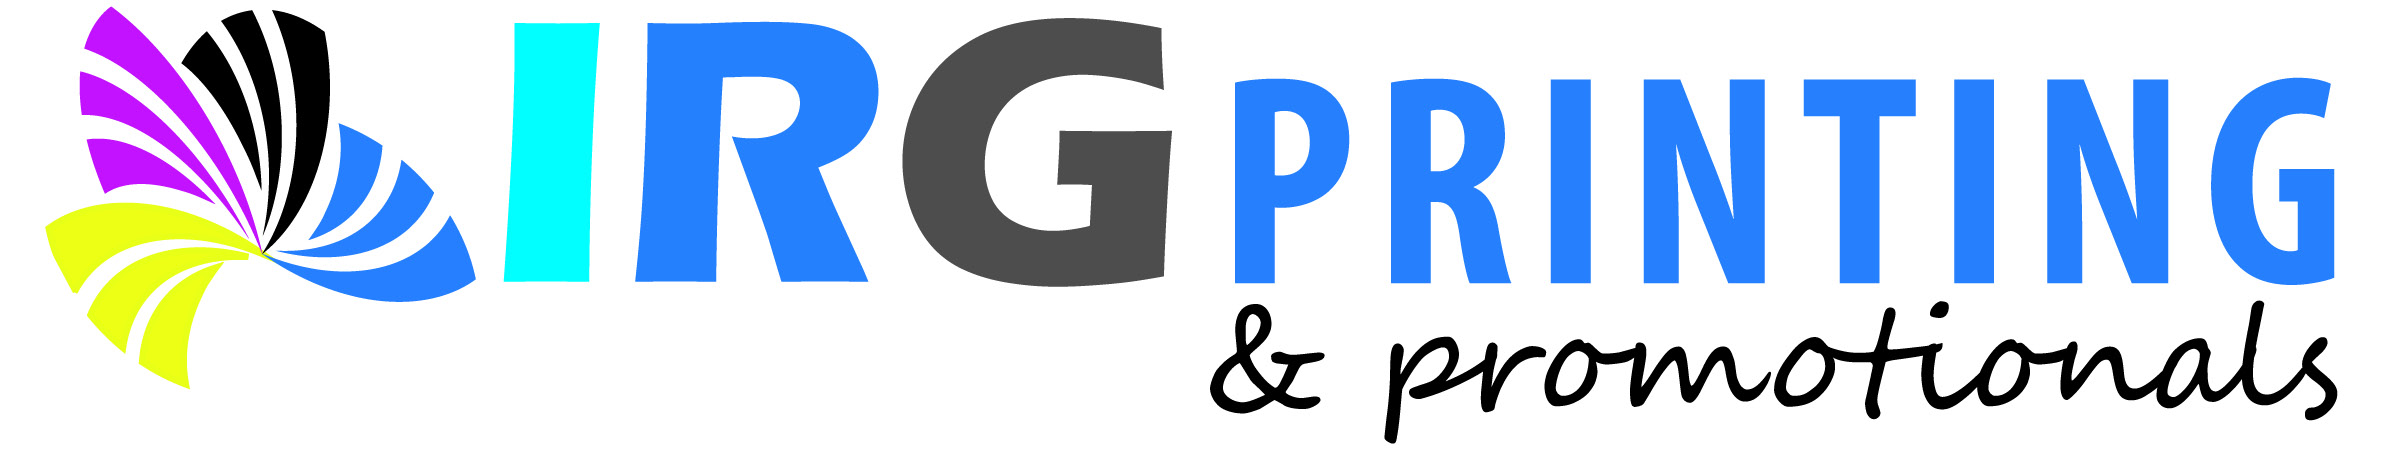 Imaging Resource Group's Logo